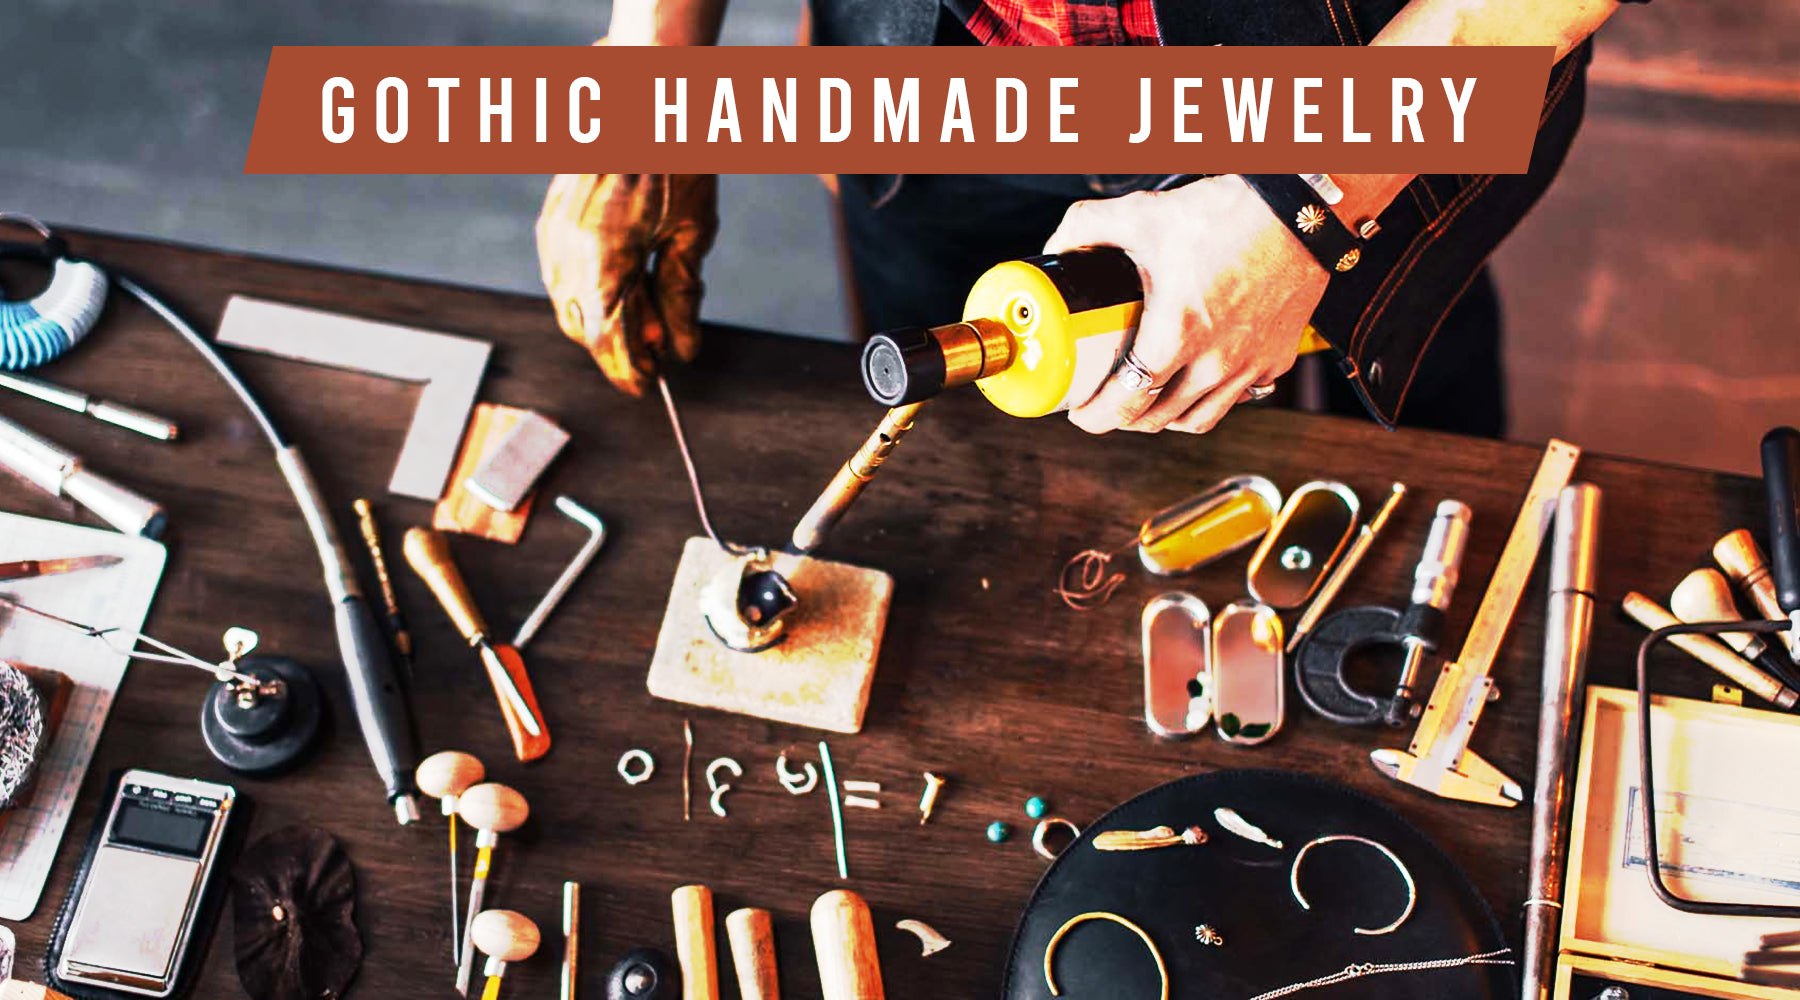 The Craftsmanship Behind Handmade Gothic Jewelry